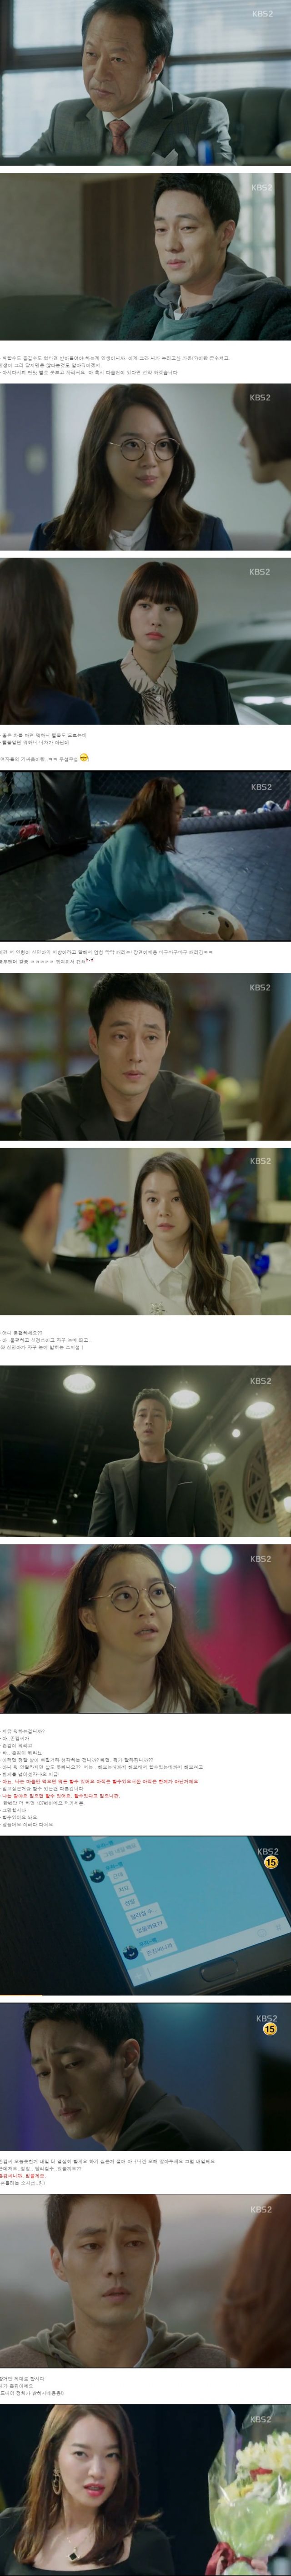 episode 3 captures for the Korean drama 'Oh My Venus'